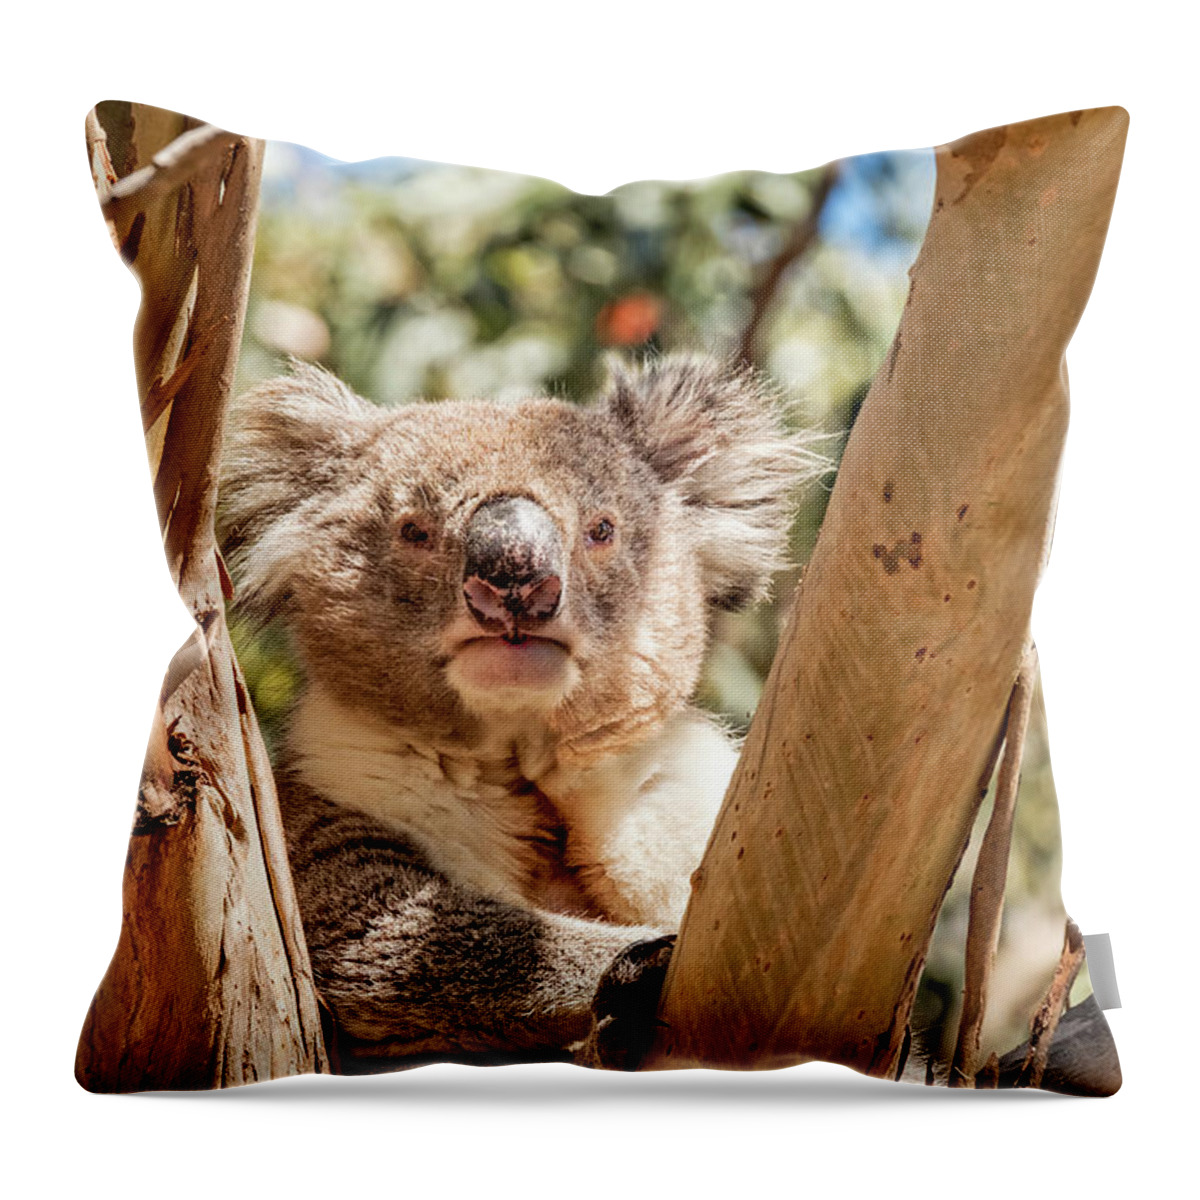 Koala Throw Pillow featuring the photograph Posing Koala by Catherine Reading